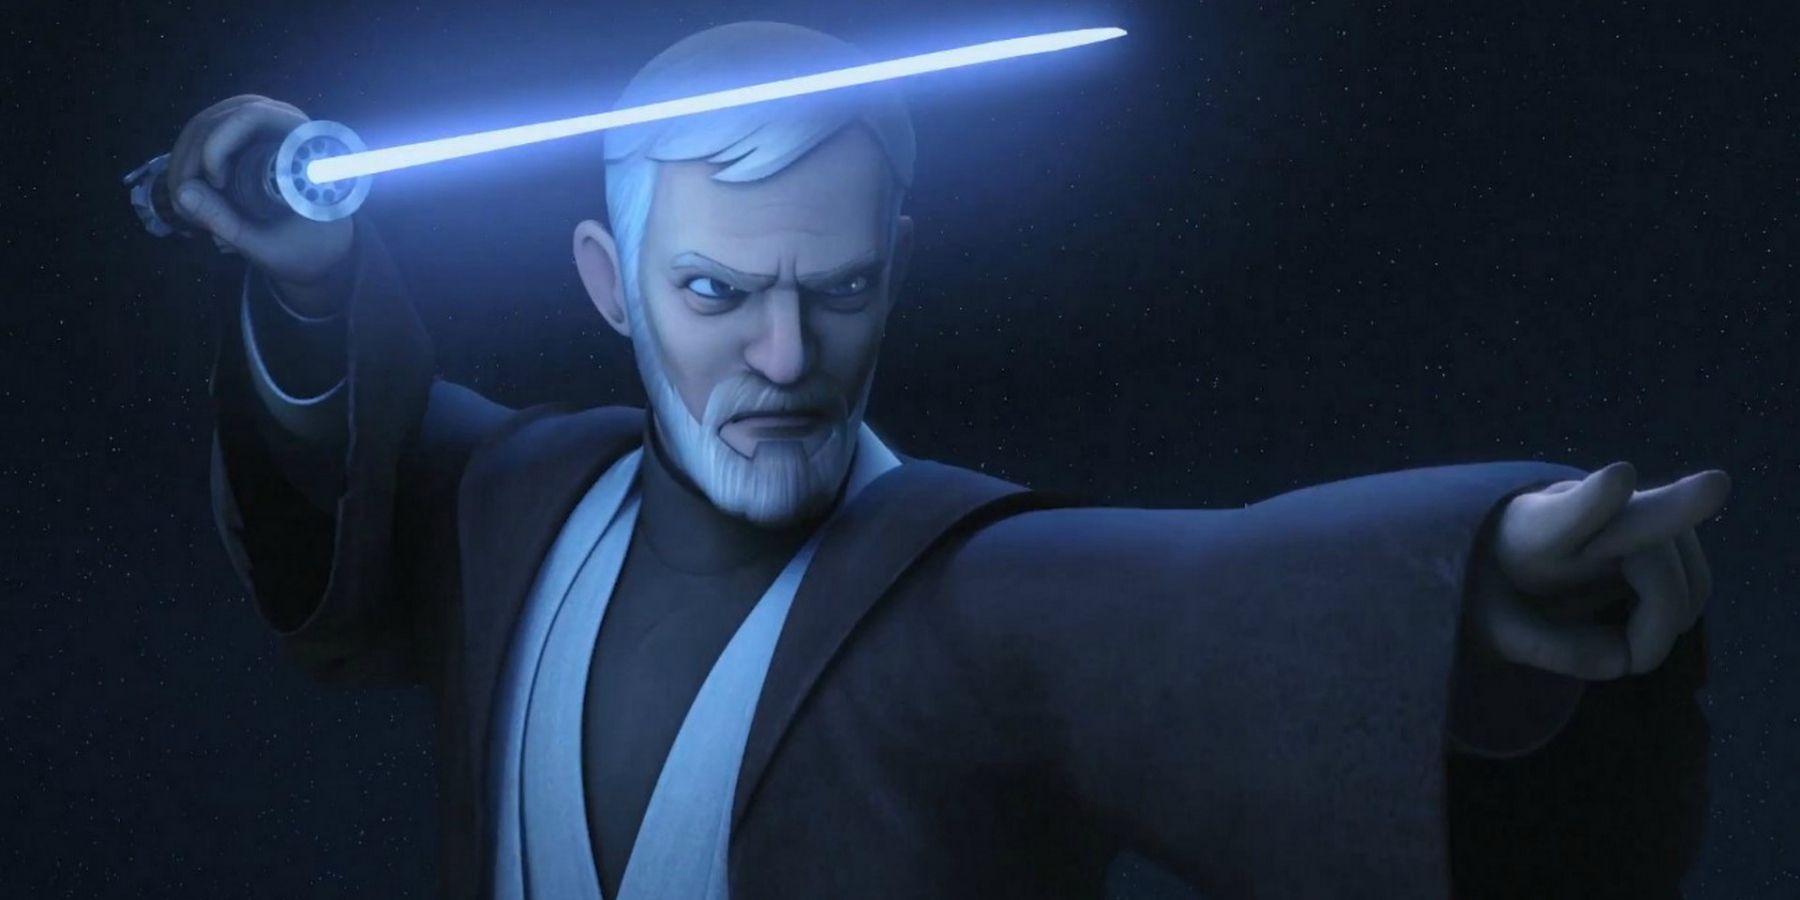 Obi-Wan Kenobi in Star Wars Rebels